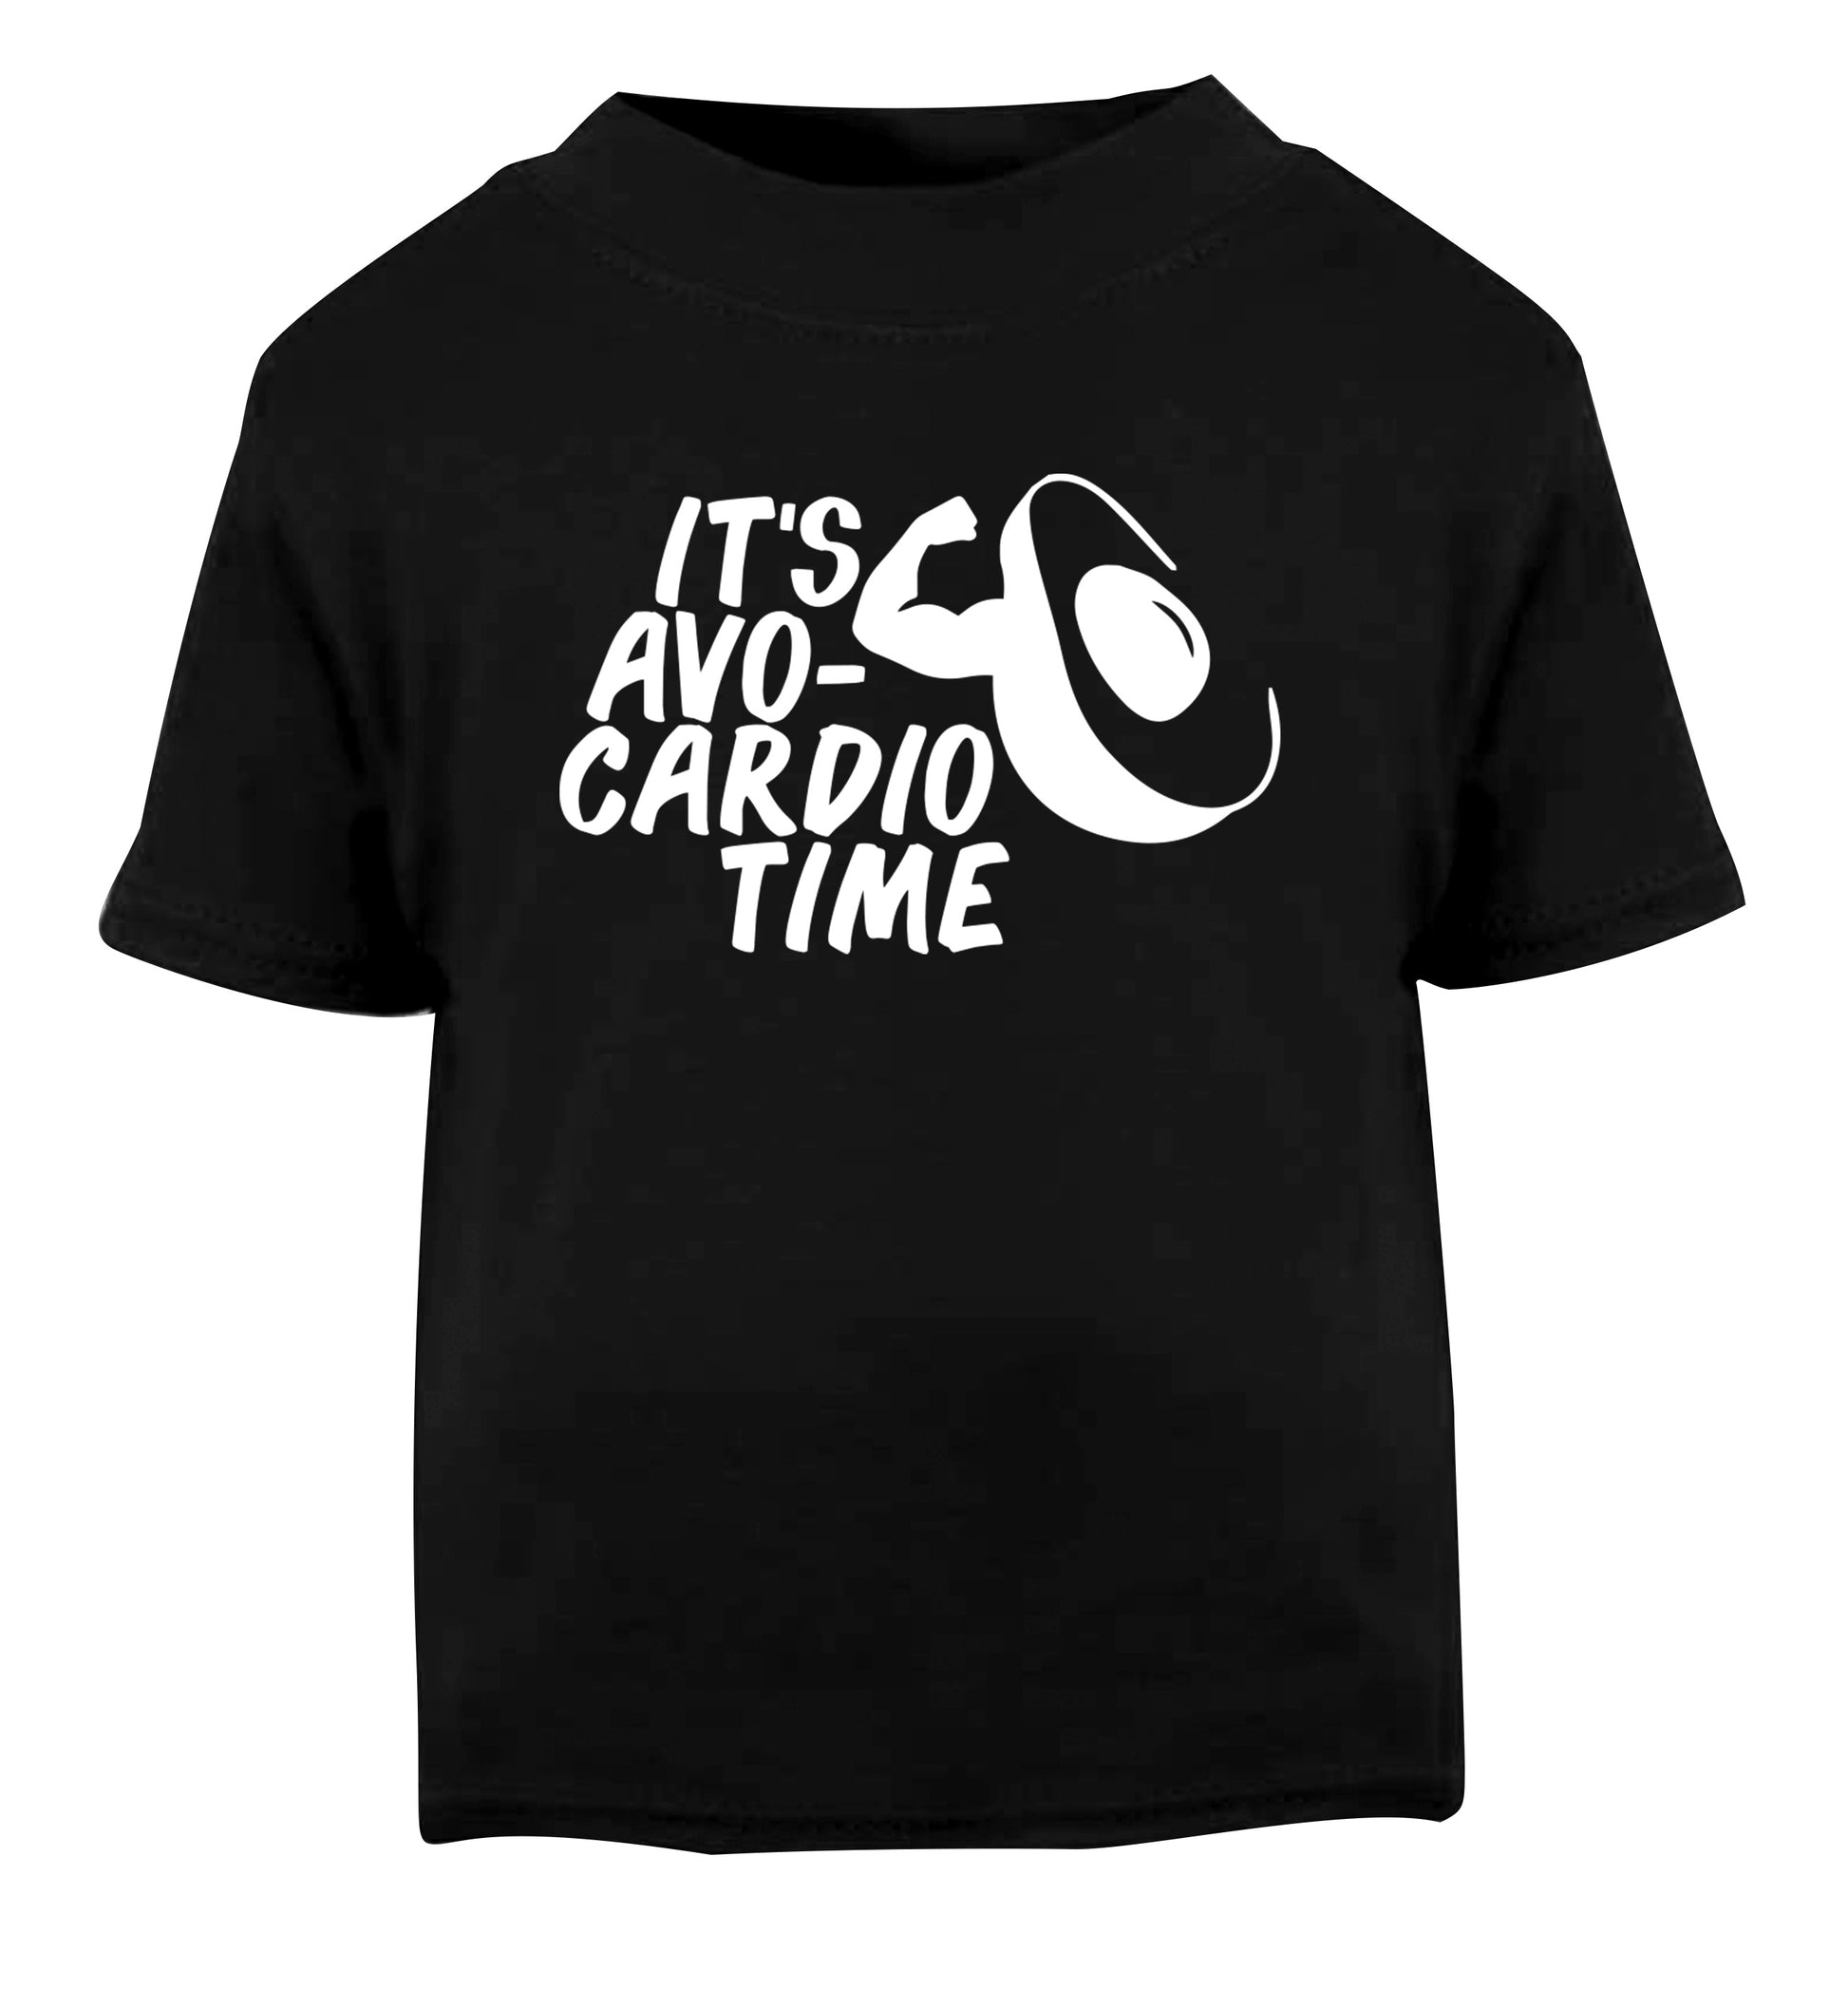 It's avo-cardio time Black Baby Toddler Tshirt 2 years